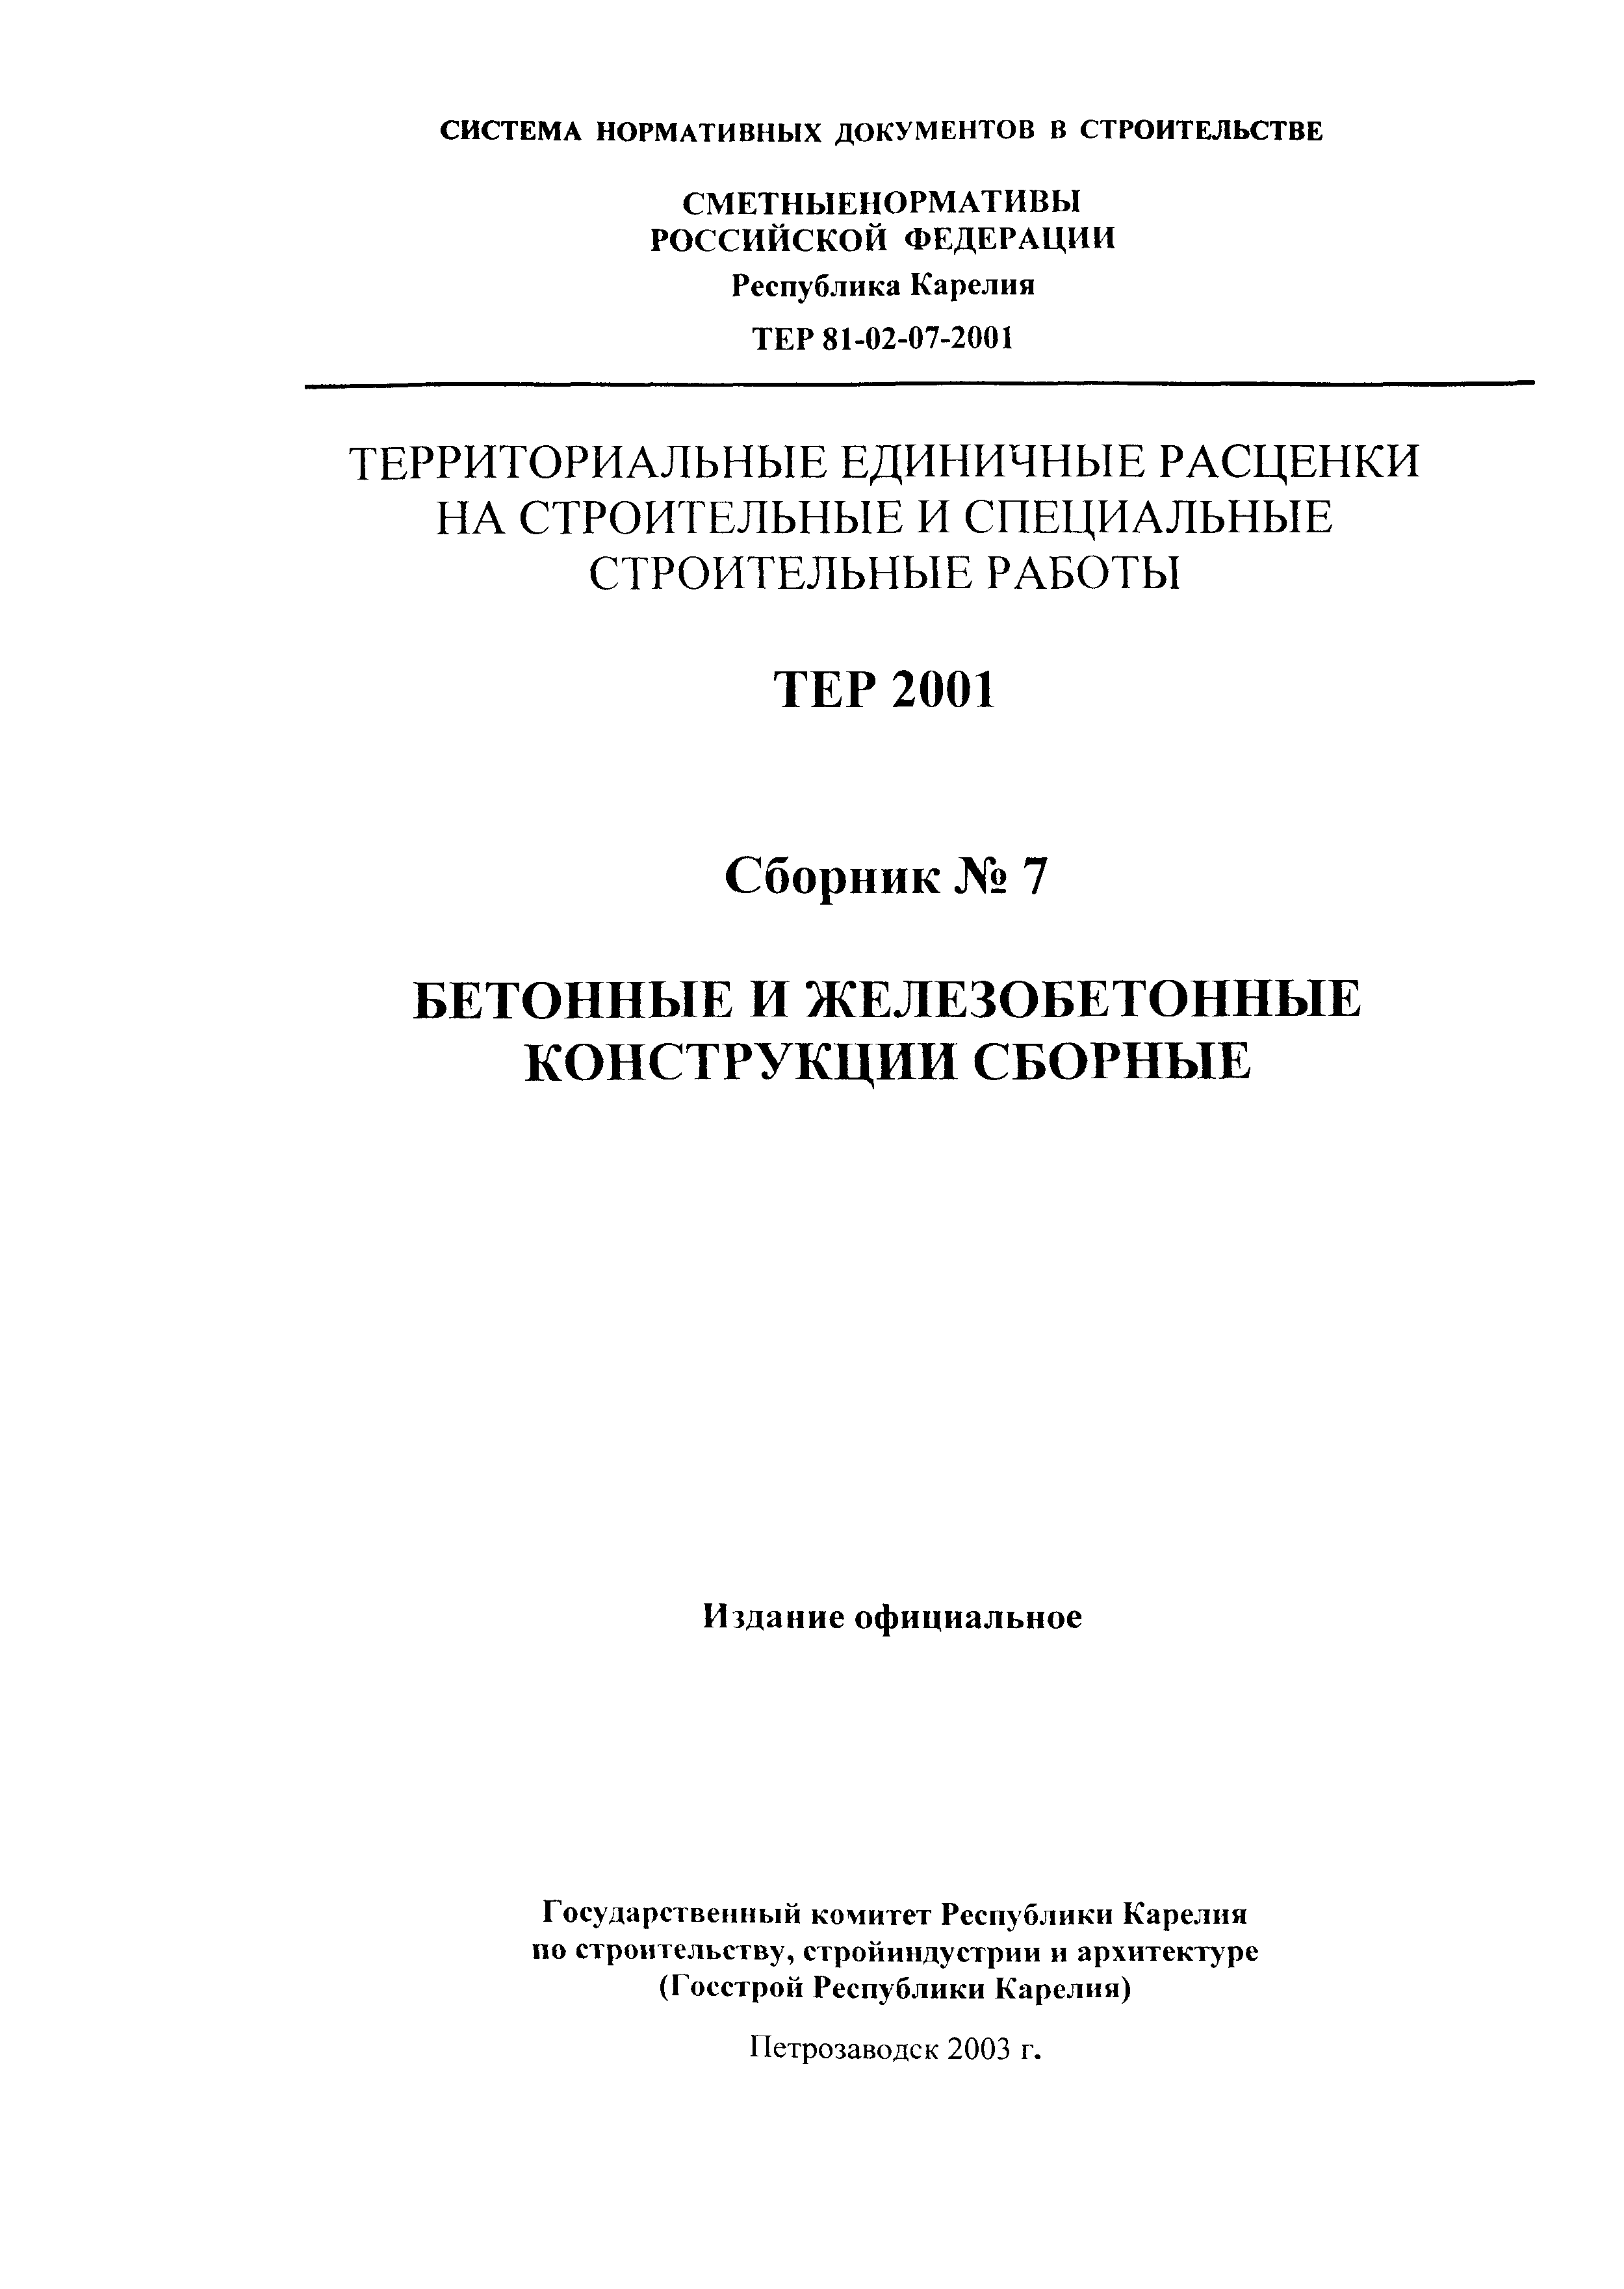 ТЕР Республика Карелия 2001-07